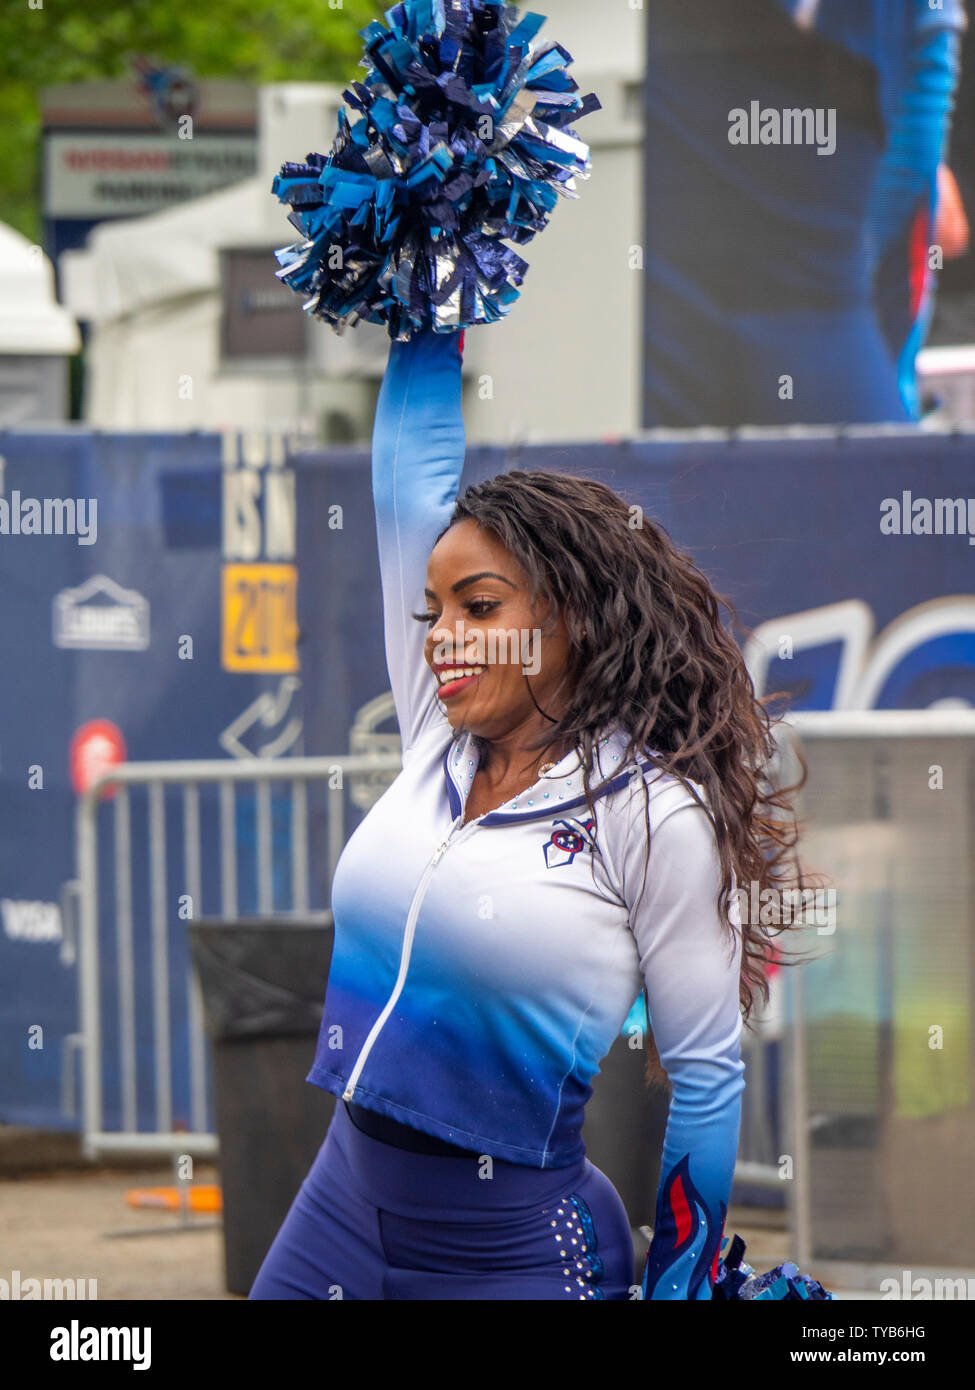 Afro-American Tennessee Titans cheerleader at NFL Draft 2019 Nissan Stadium, Nashville Tennessee, USA. Stock Photo